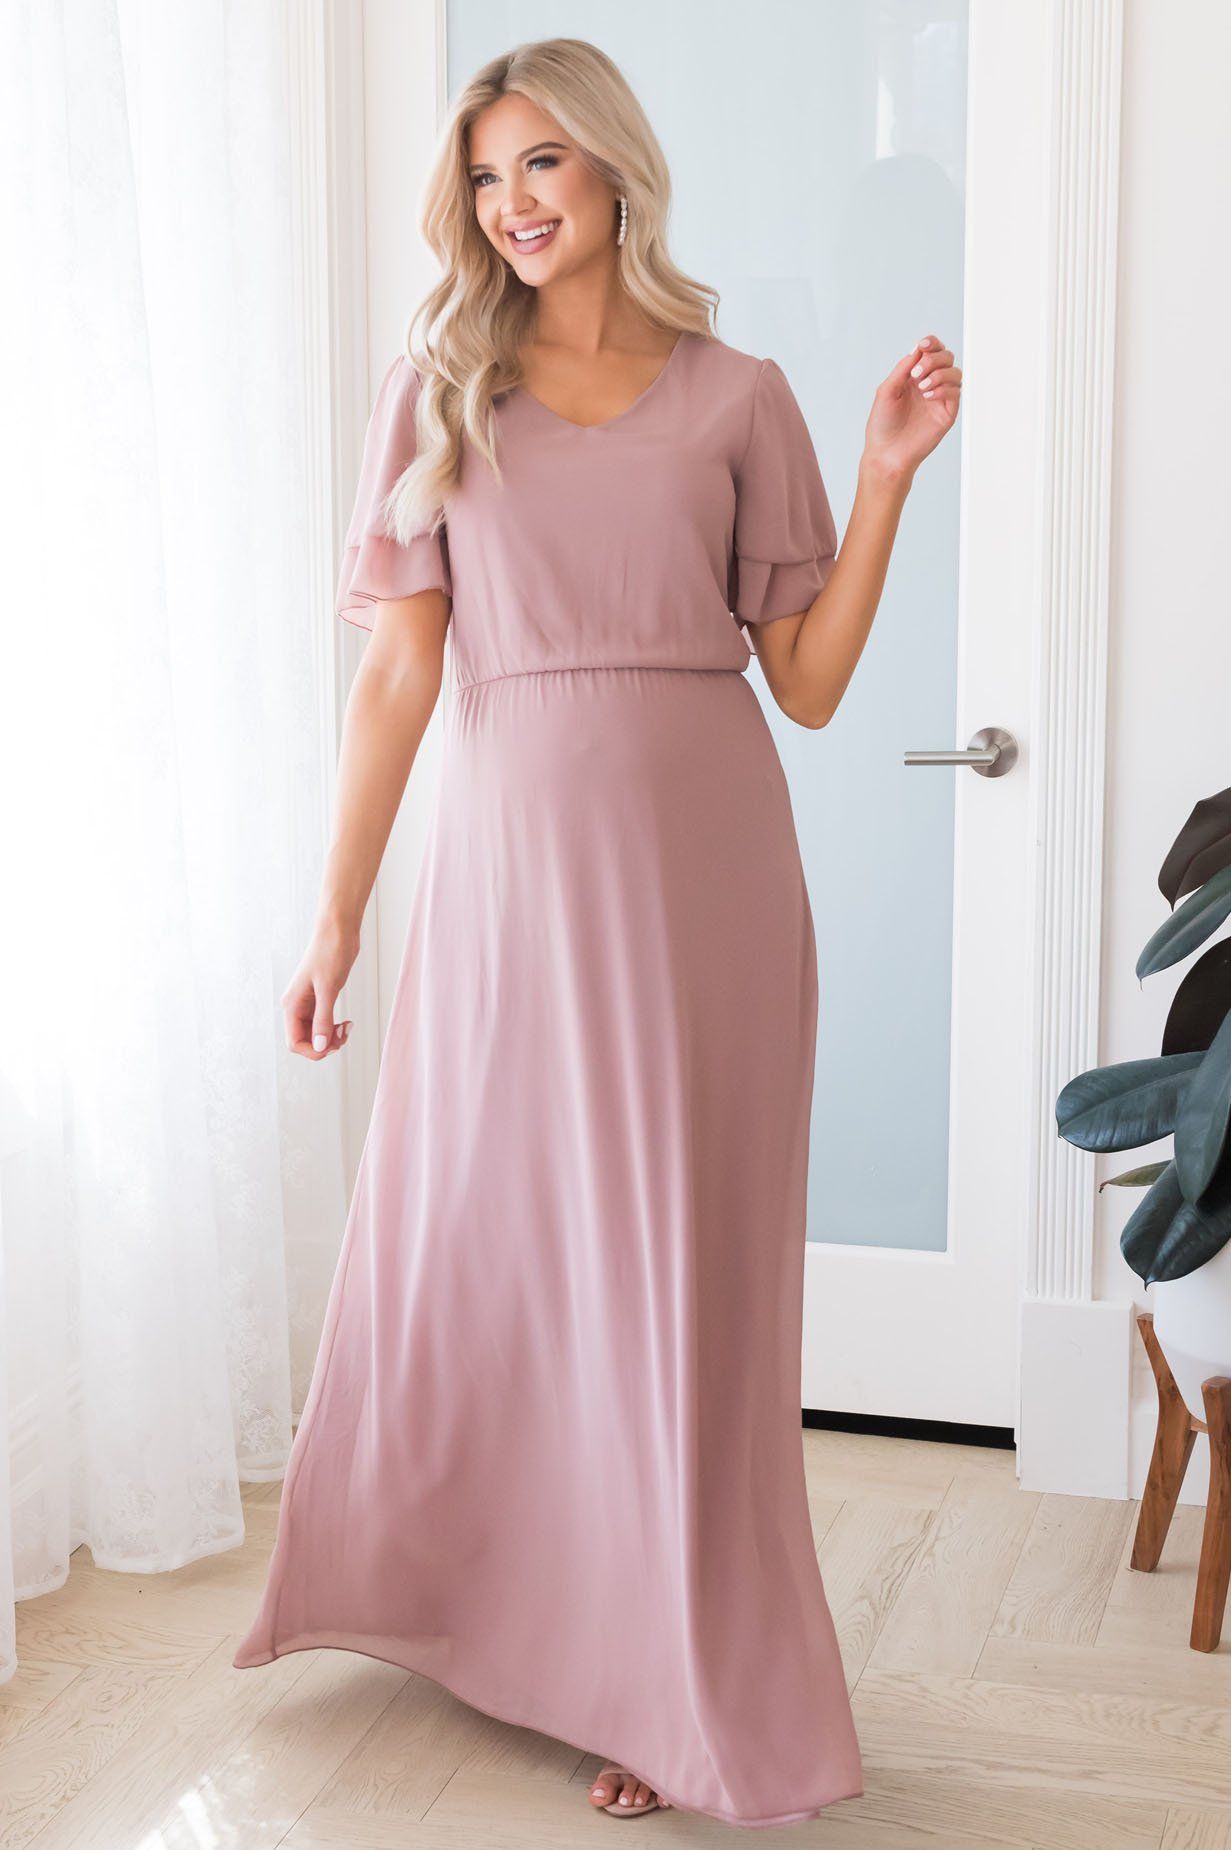 dusty lilac bridesmaid dresses